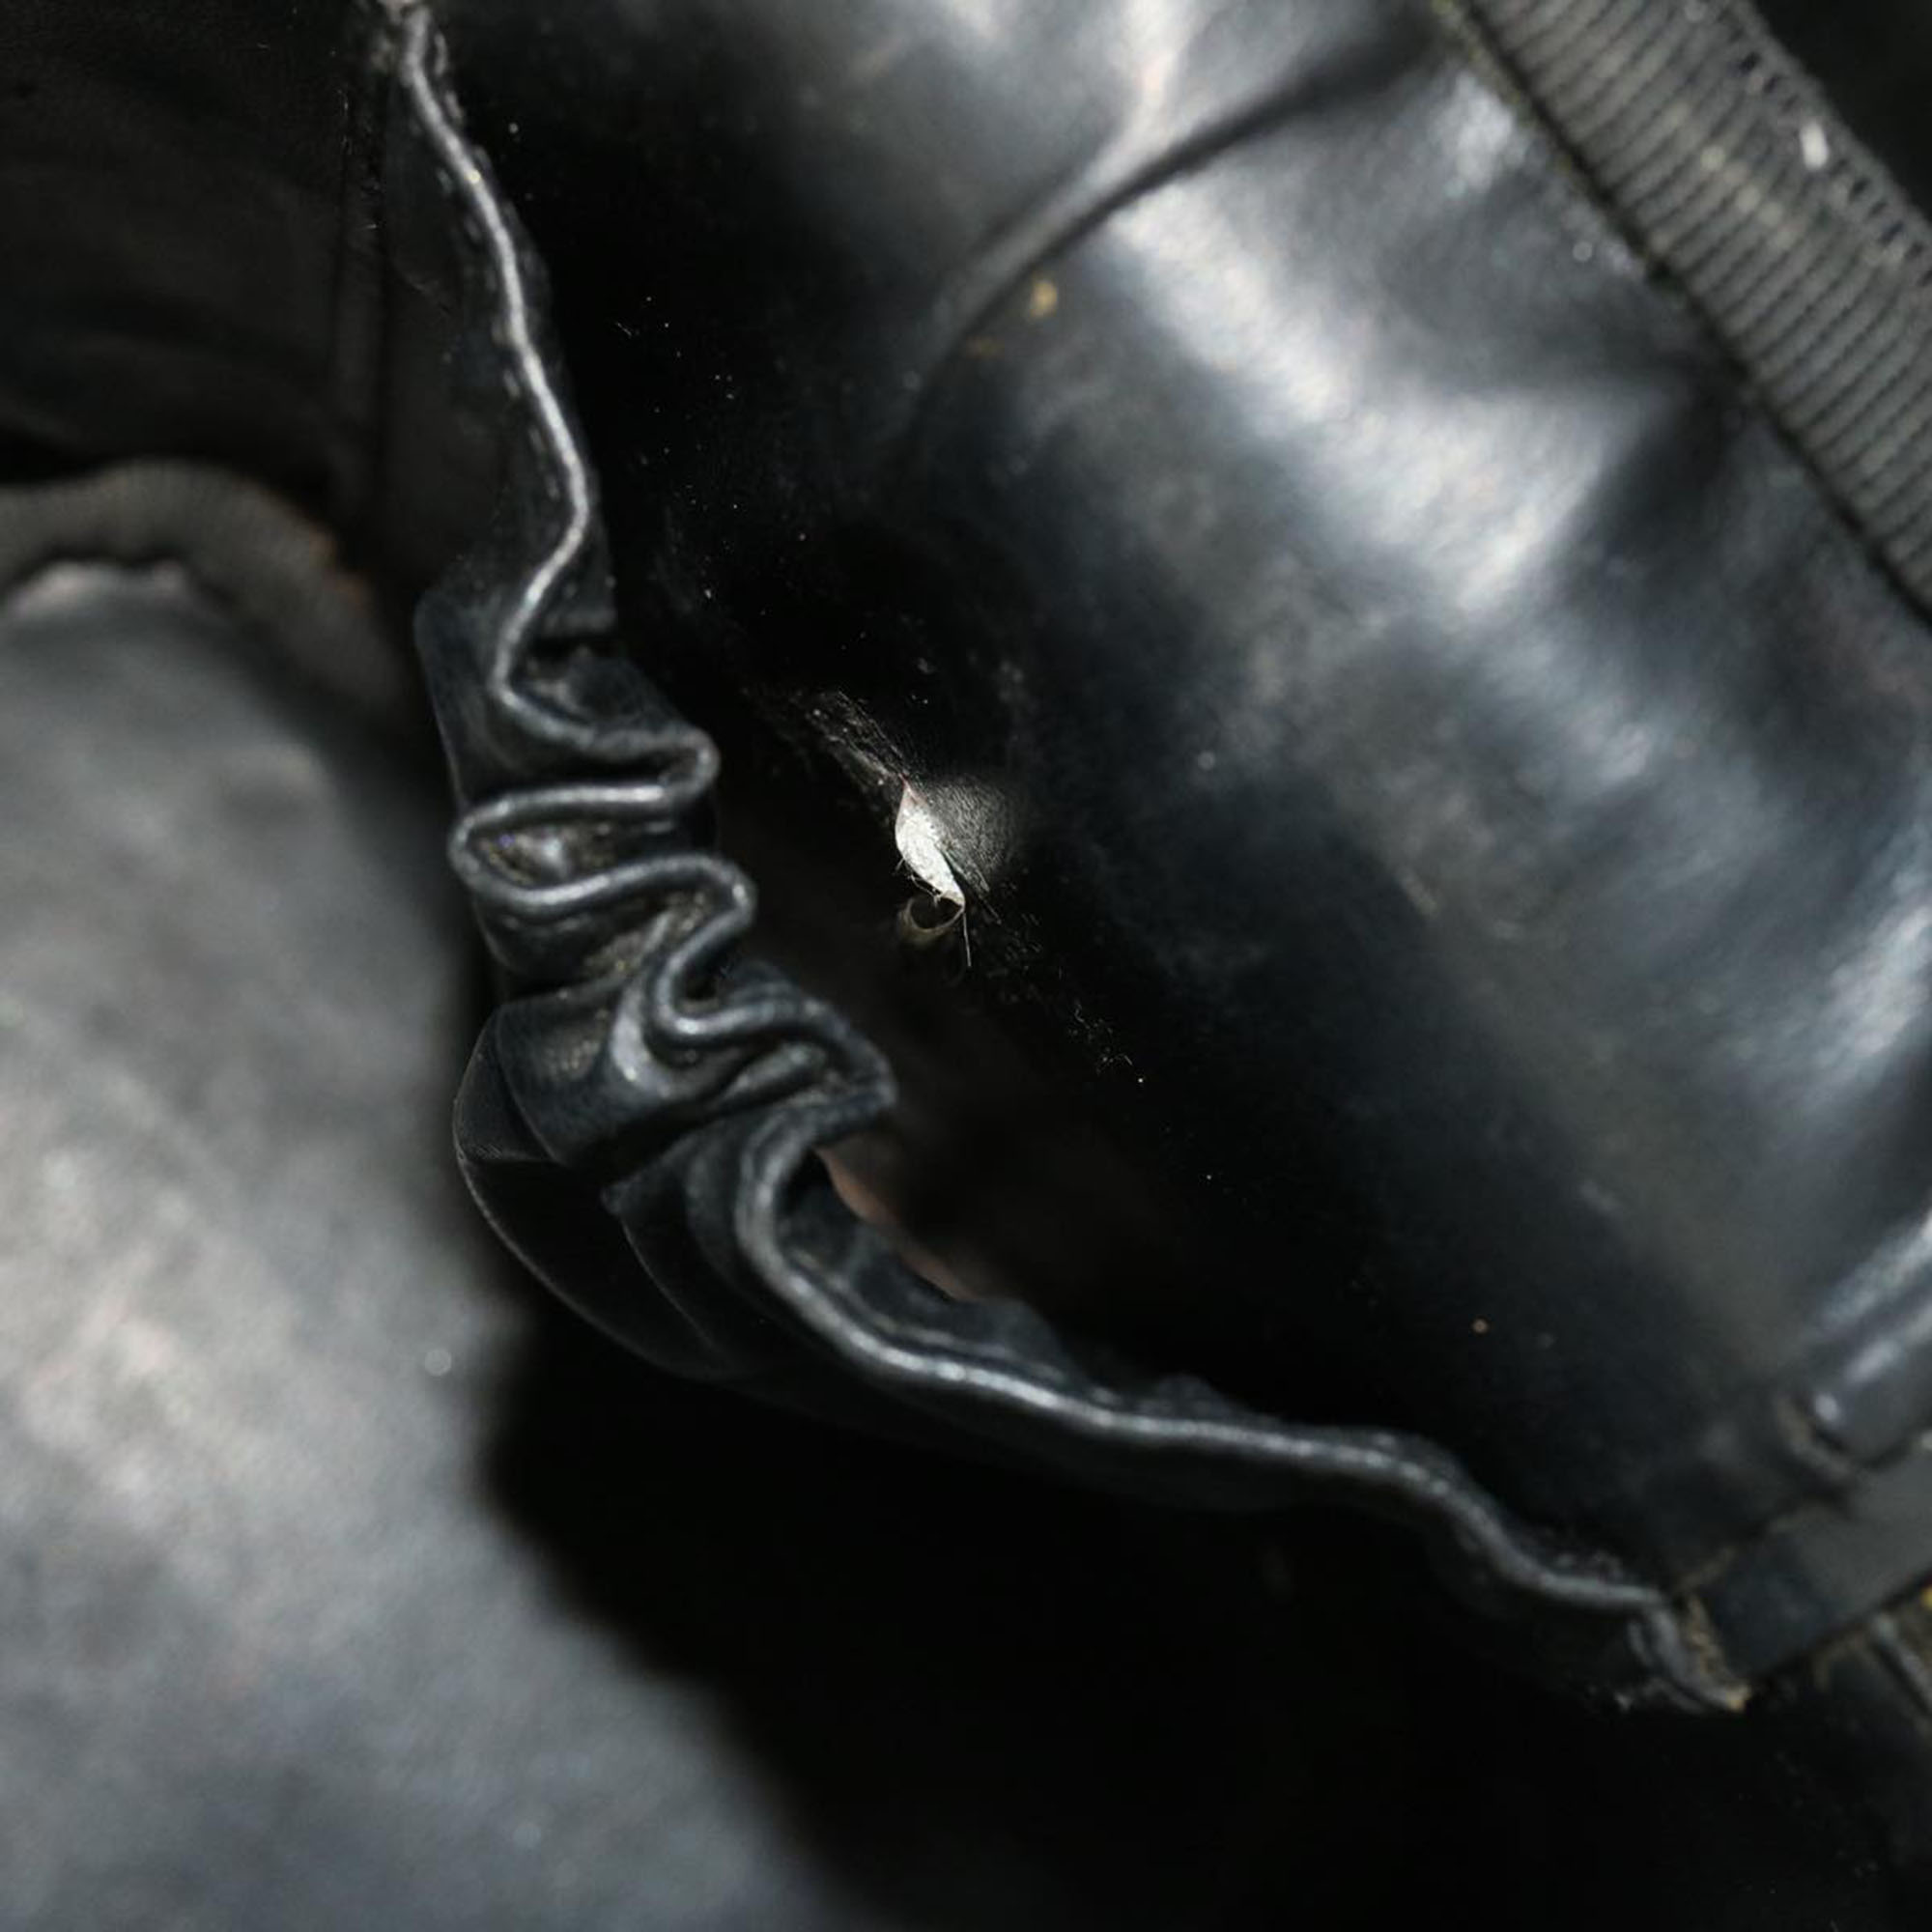 Chanel Black Leather Vanity Case